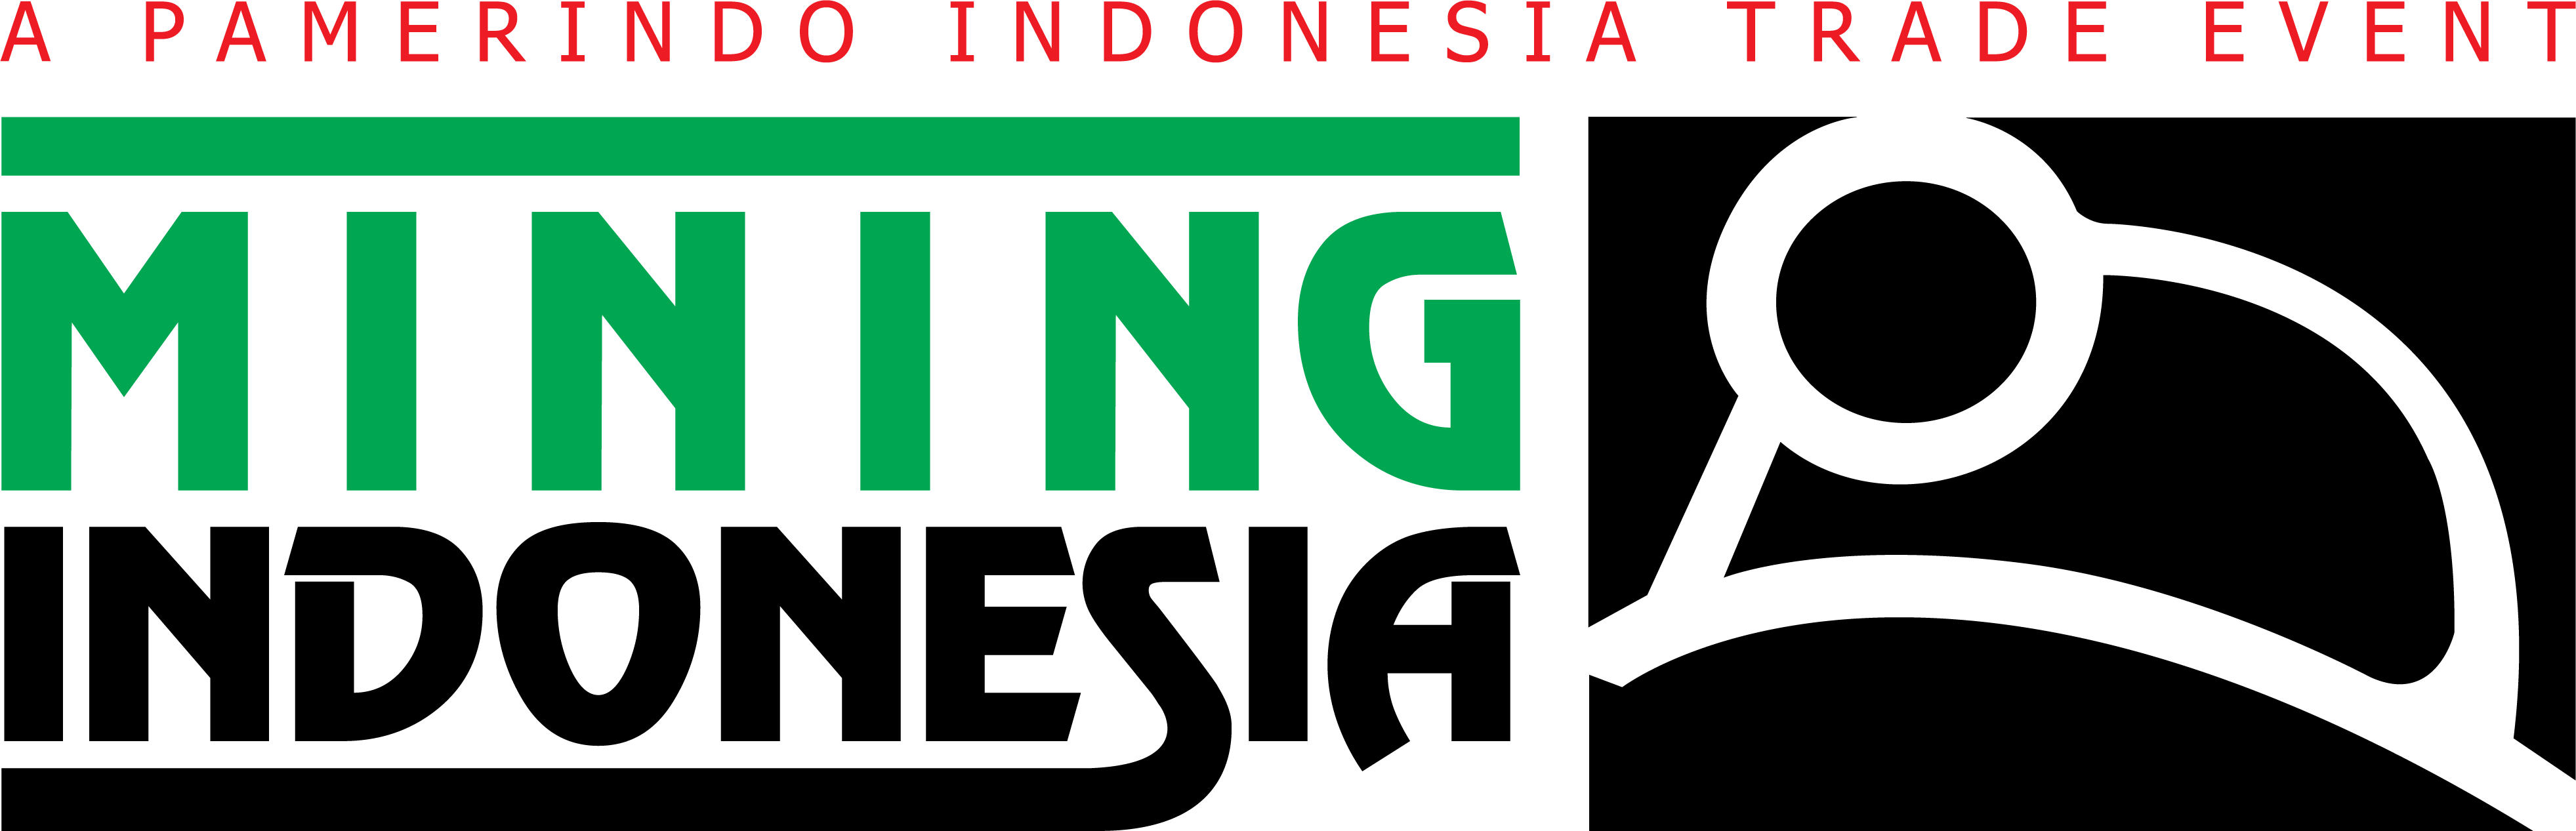 Mining Indonesia logo_1